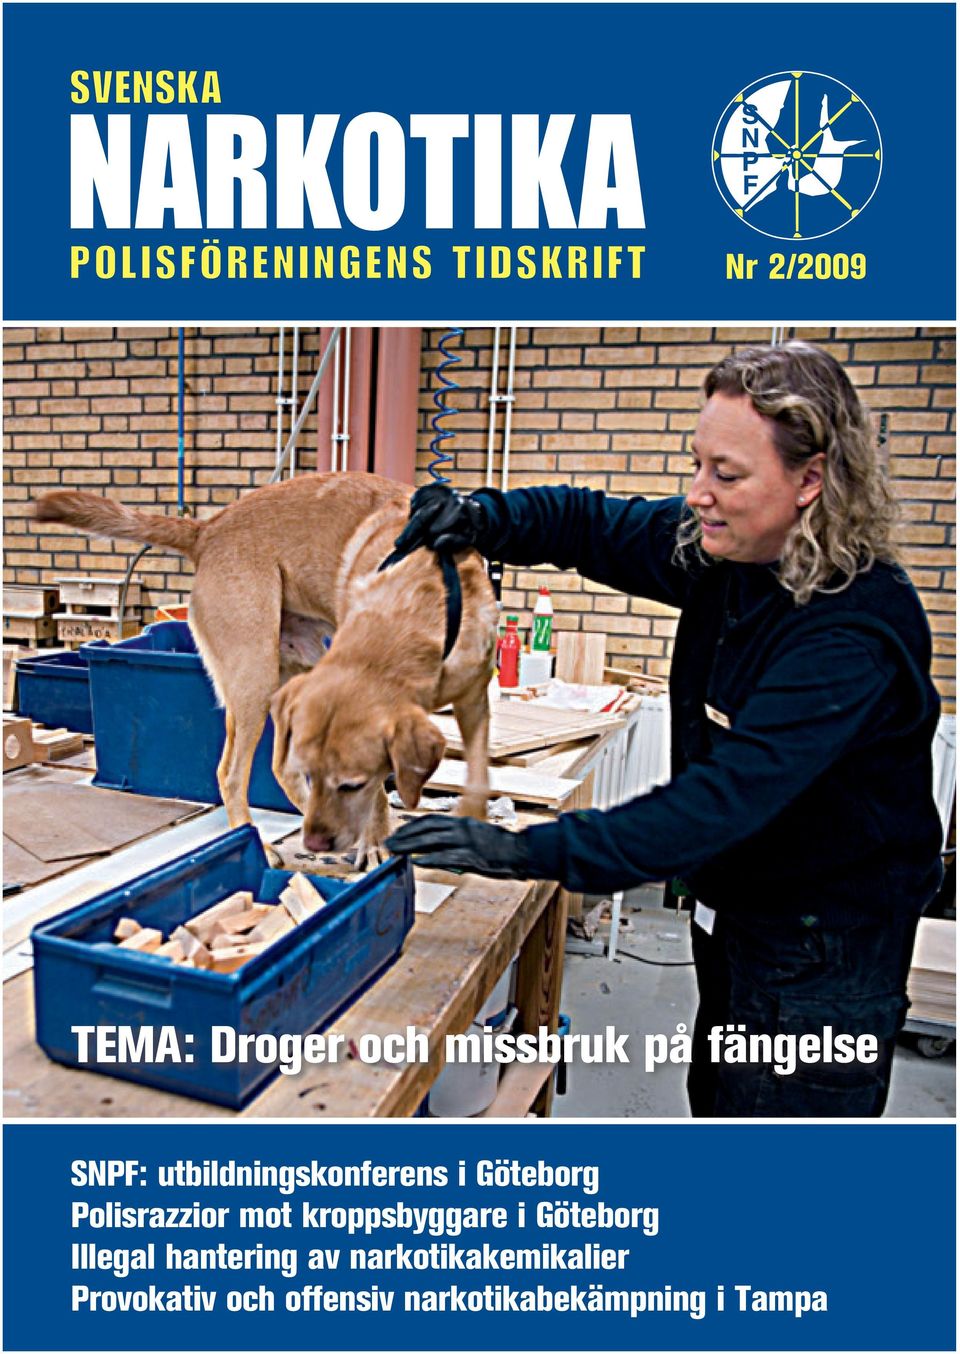 Polisrazzior mot kroppsbyggare i Göteborg Illegal hantering av